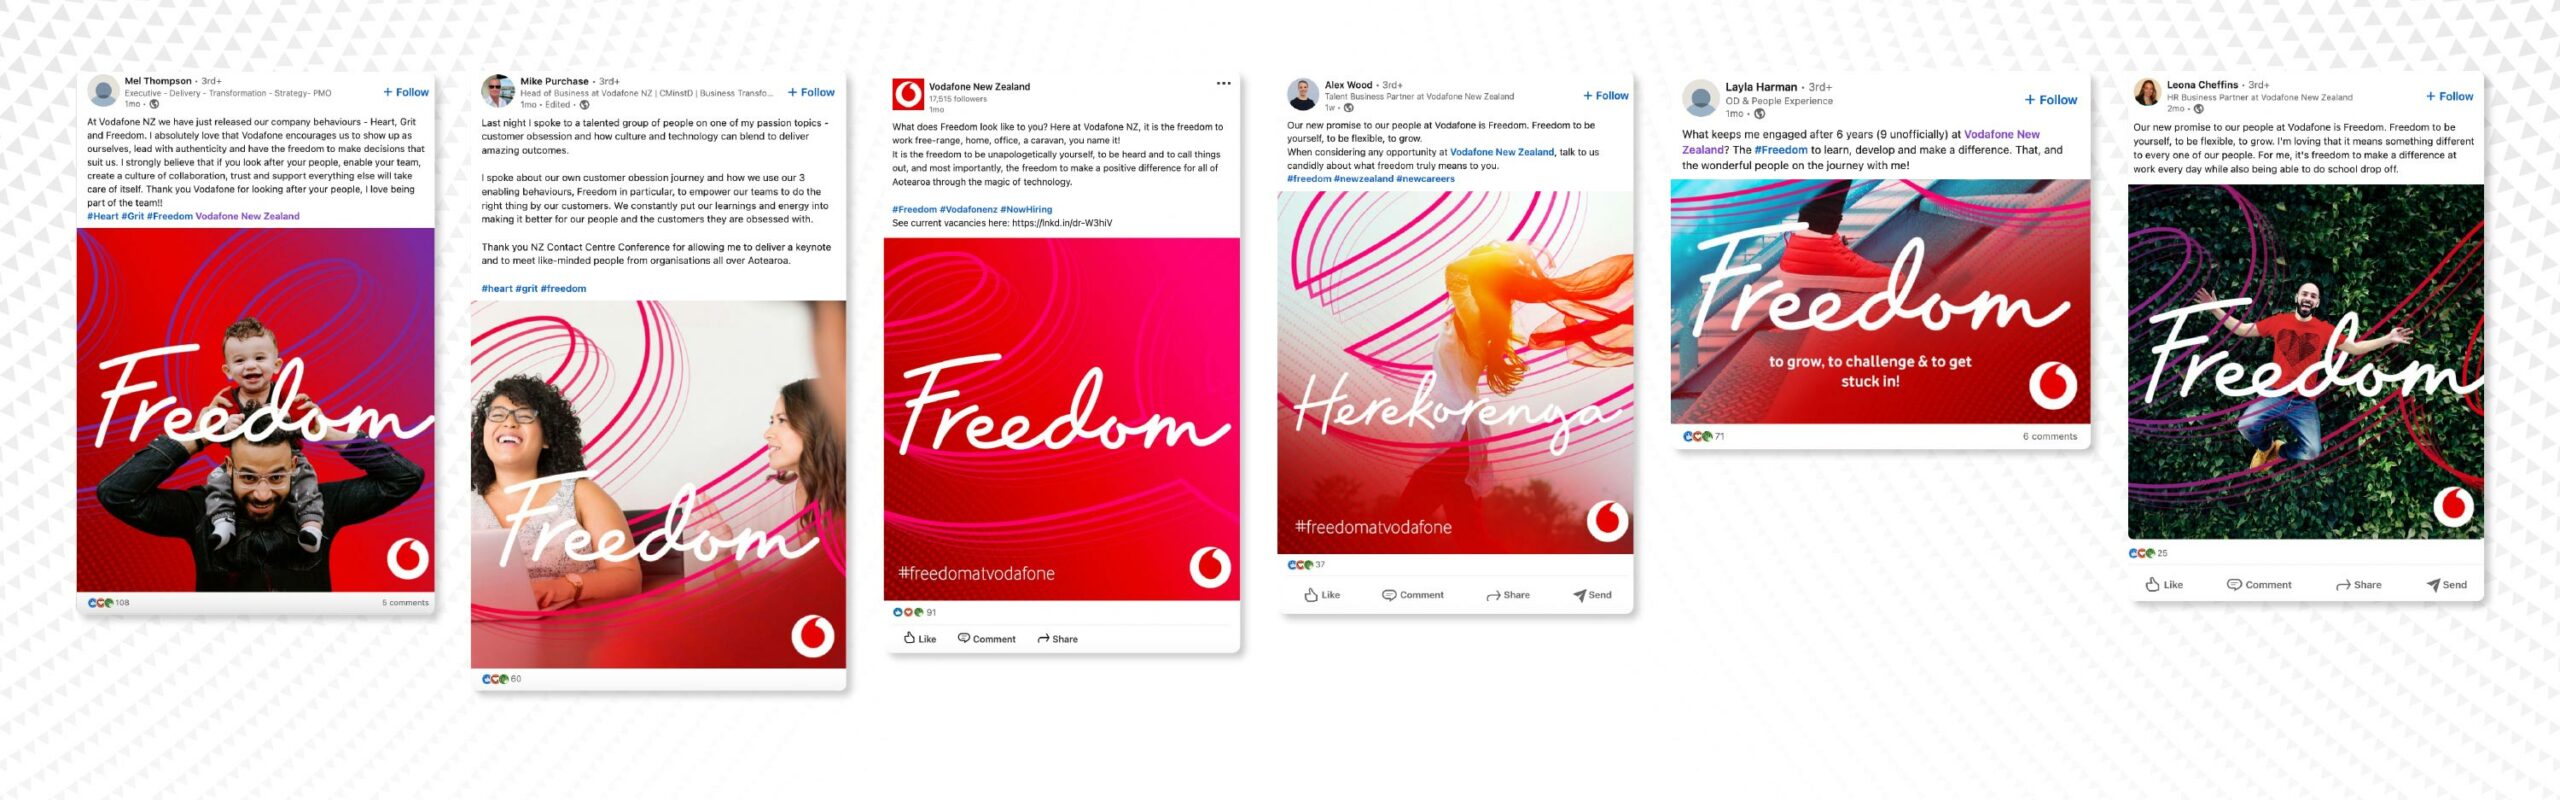 Vodafone Freedom